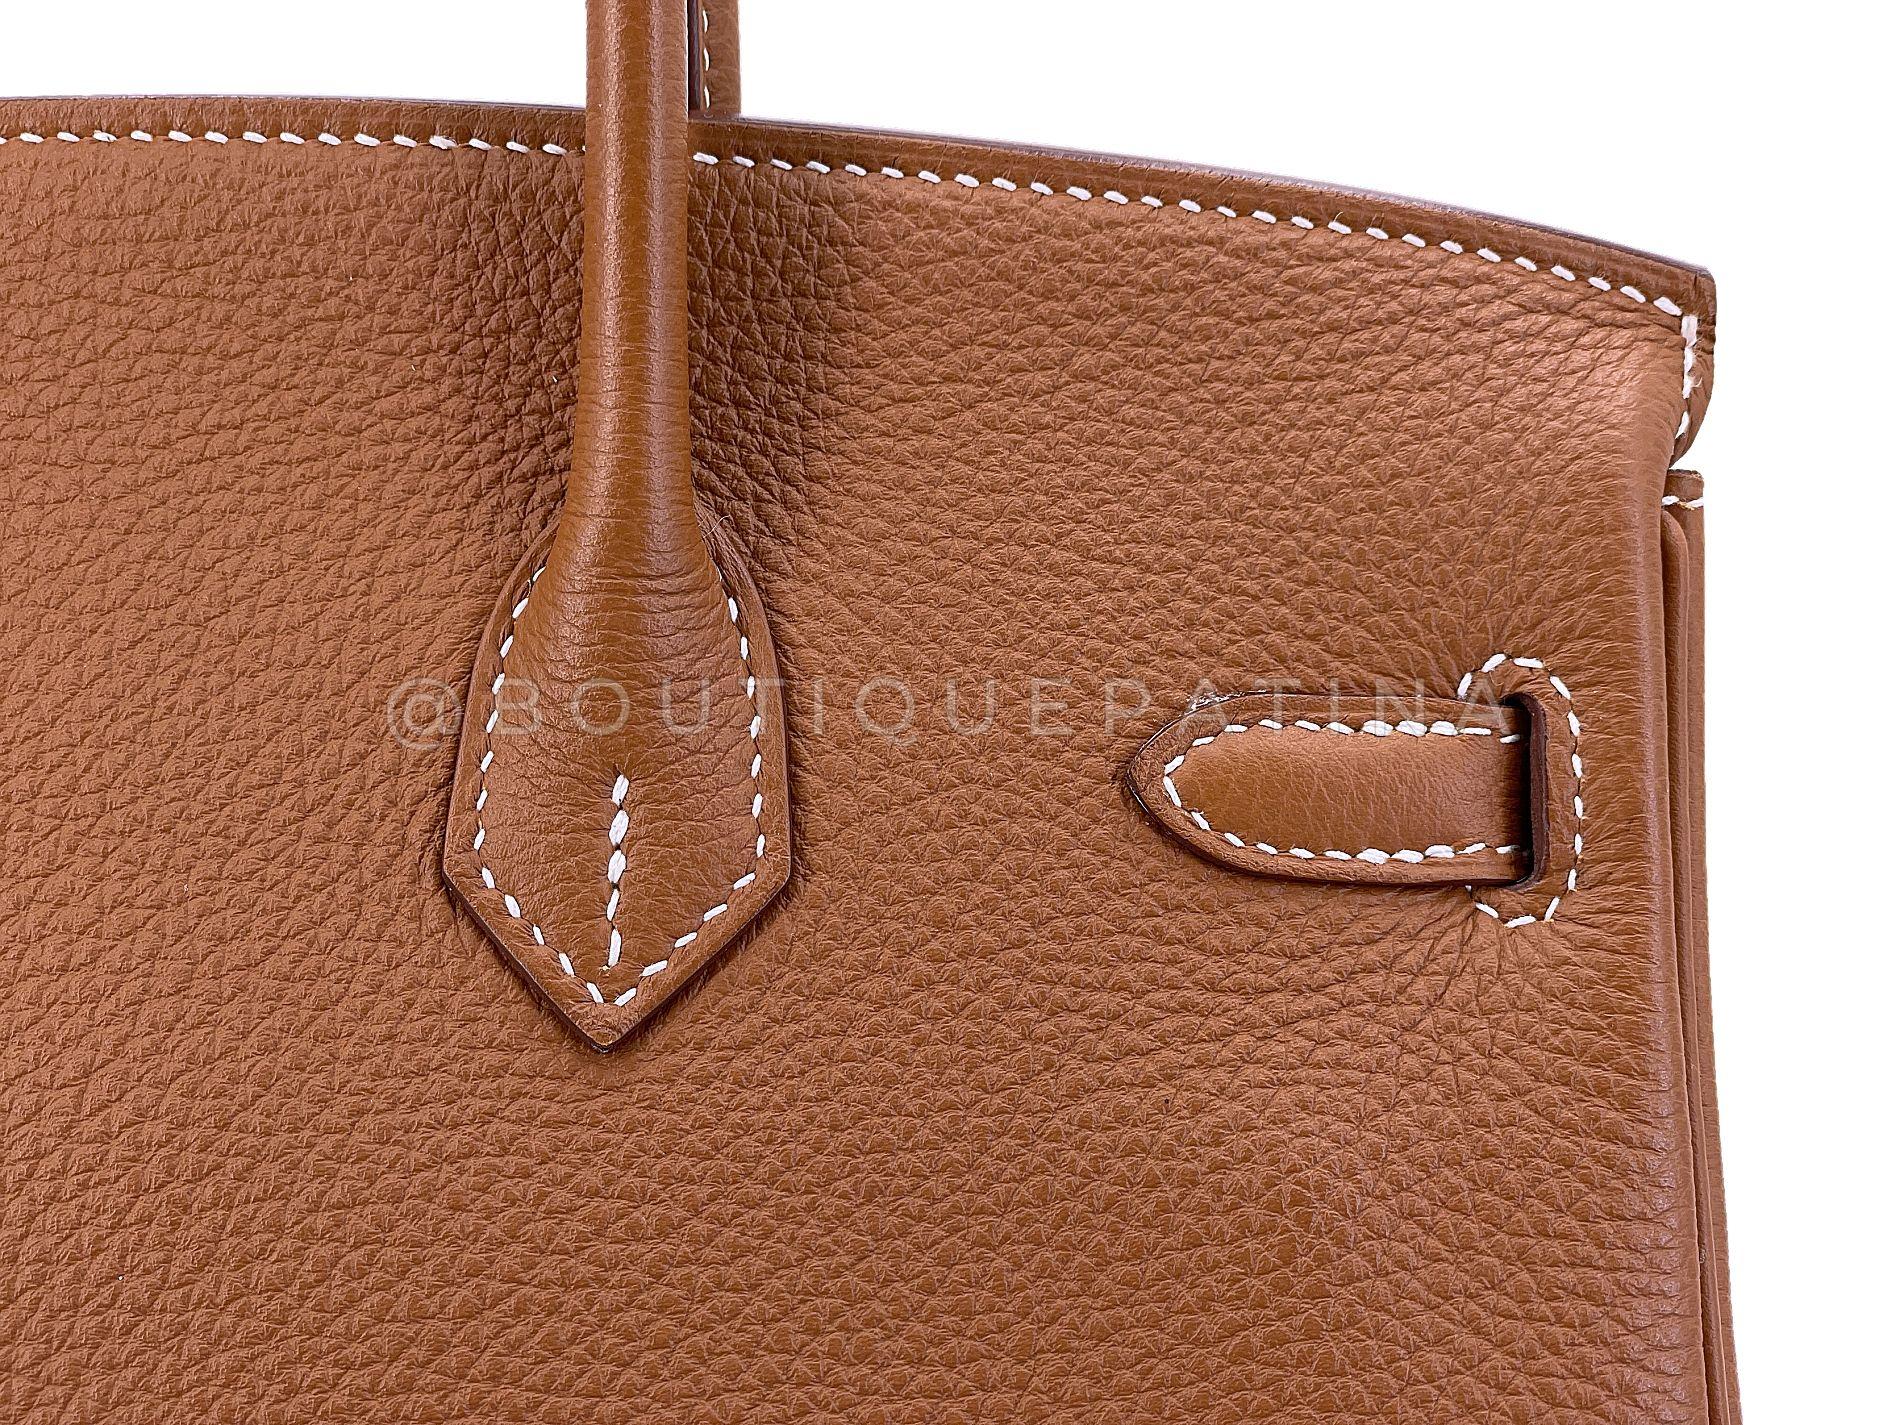 Hermès Gold Togo Birkin 25cm Tote Bag PHW 67913 For Sale 2